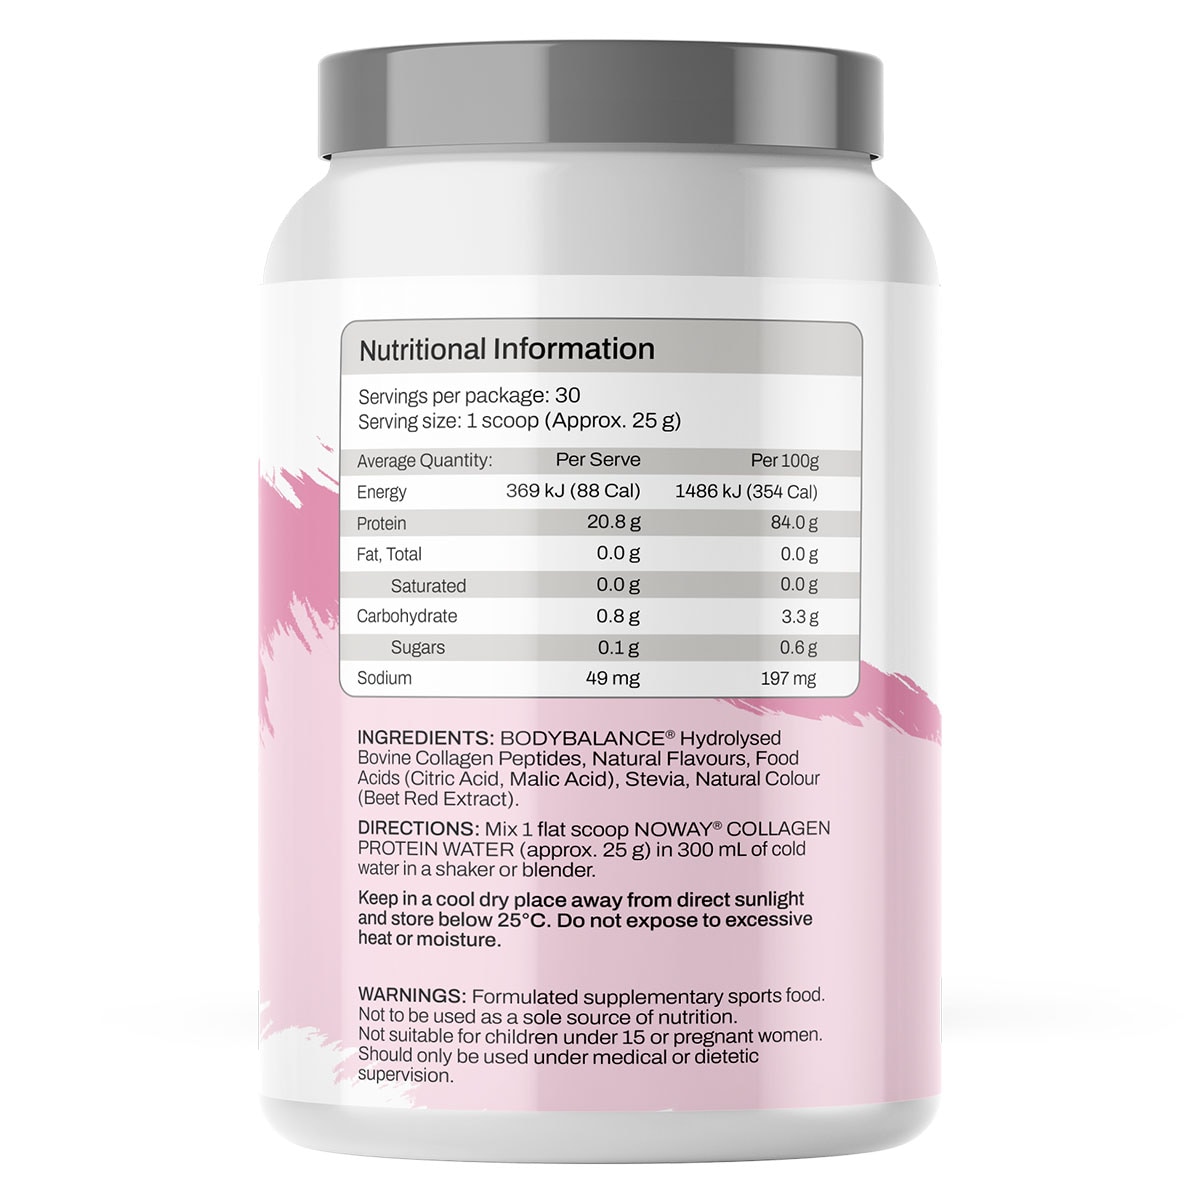 ATP Science Noway Collagen Protein Pink Lemonade 750g